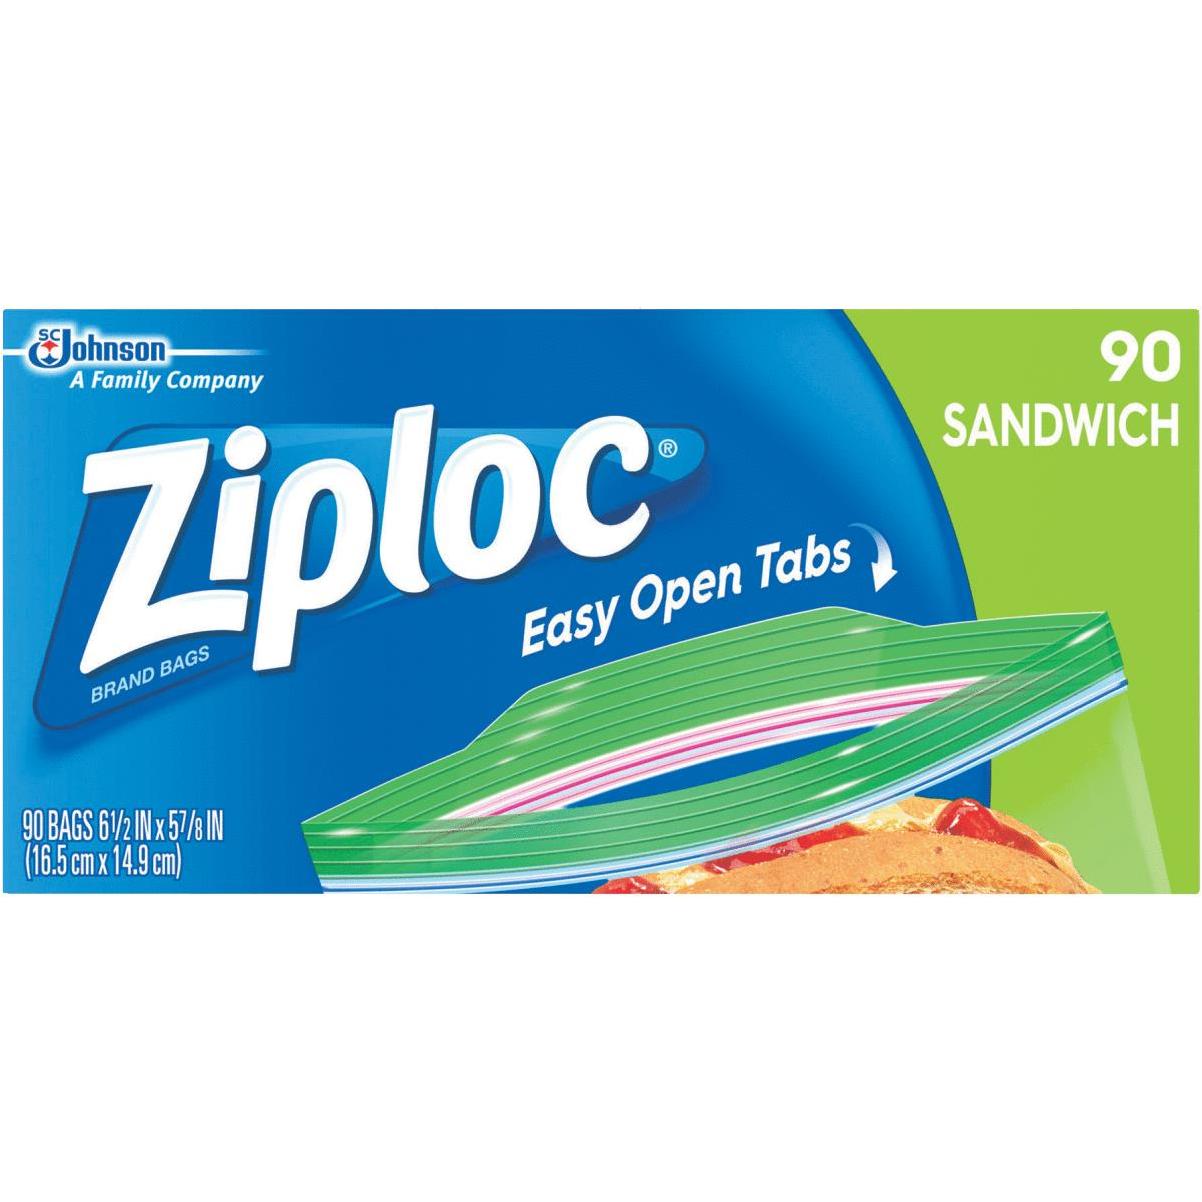 Ziploc Sandwich Bags 152 ct 